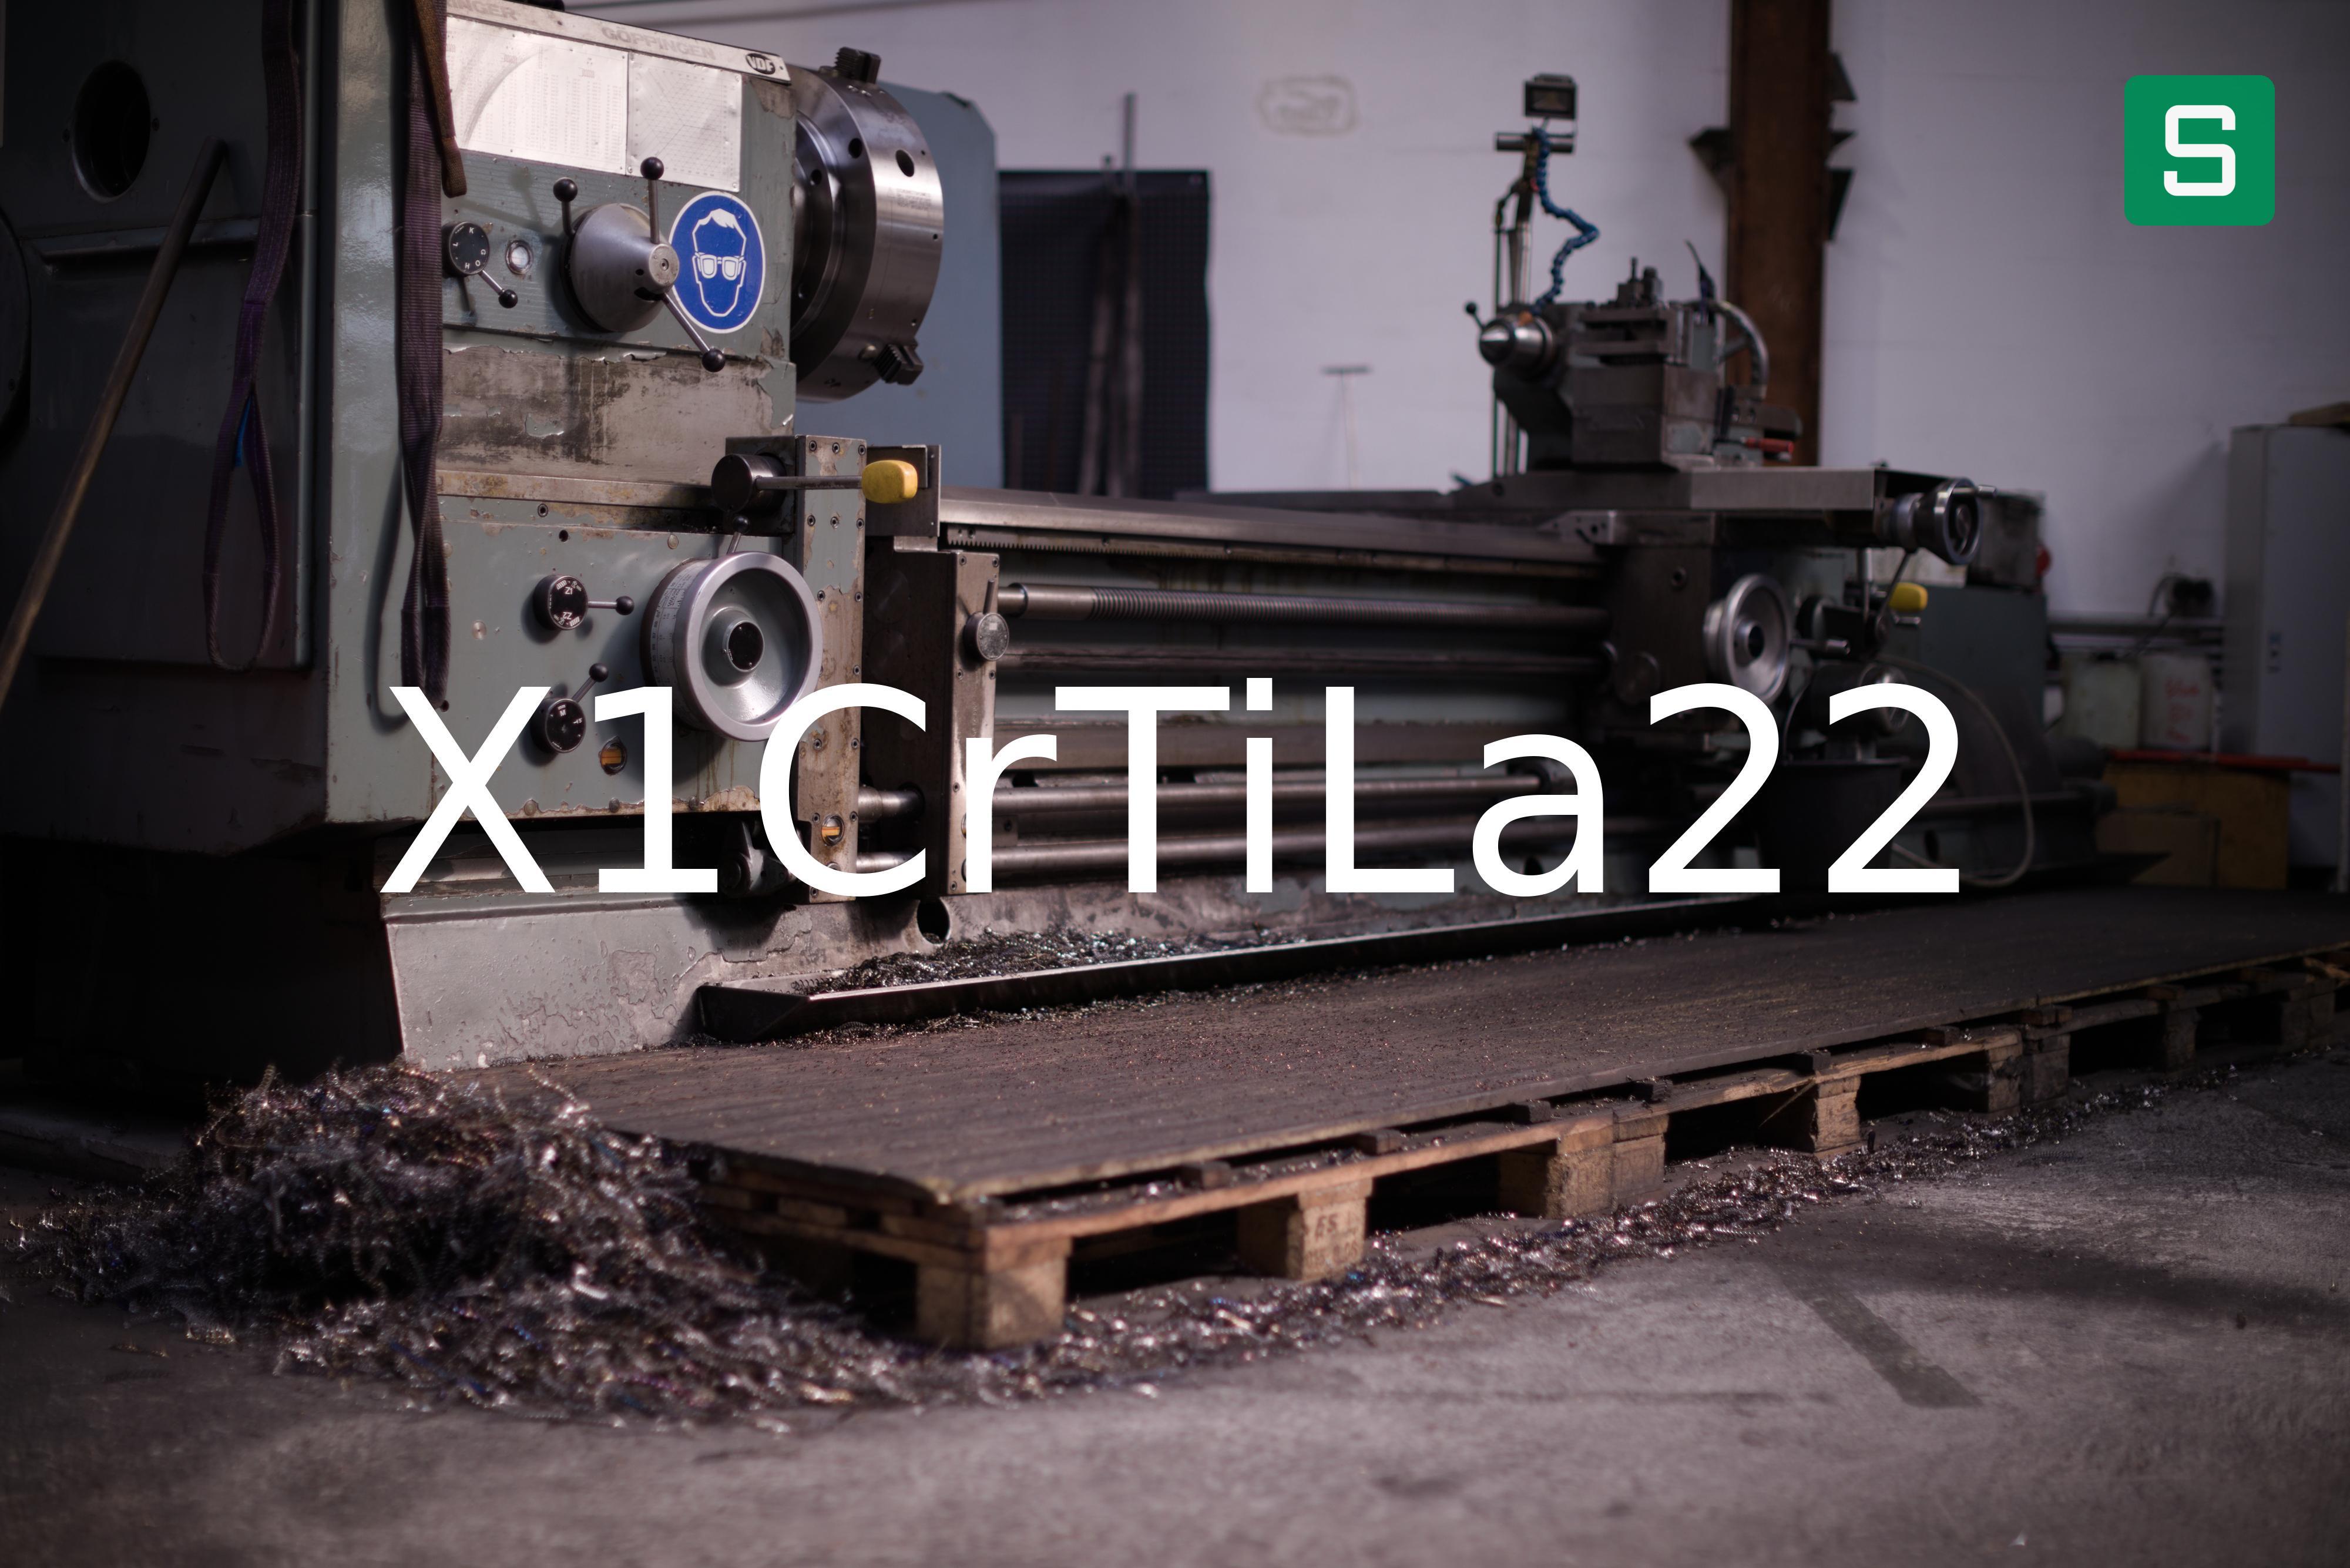 Steel Material: X1CrTiLa22